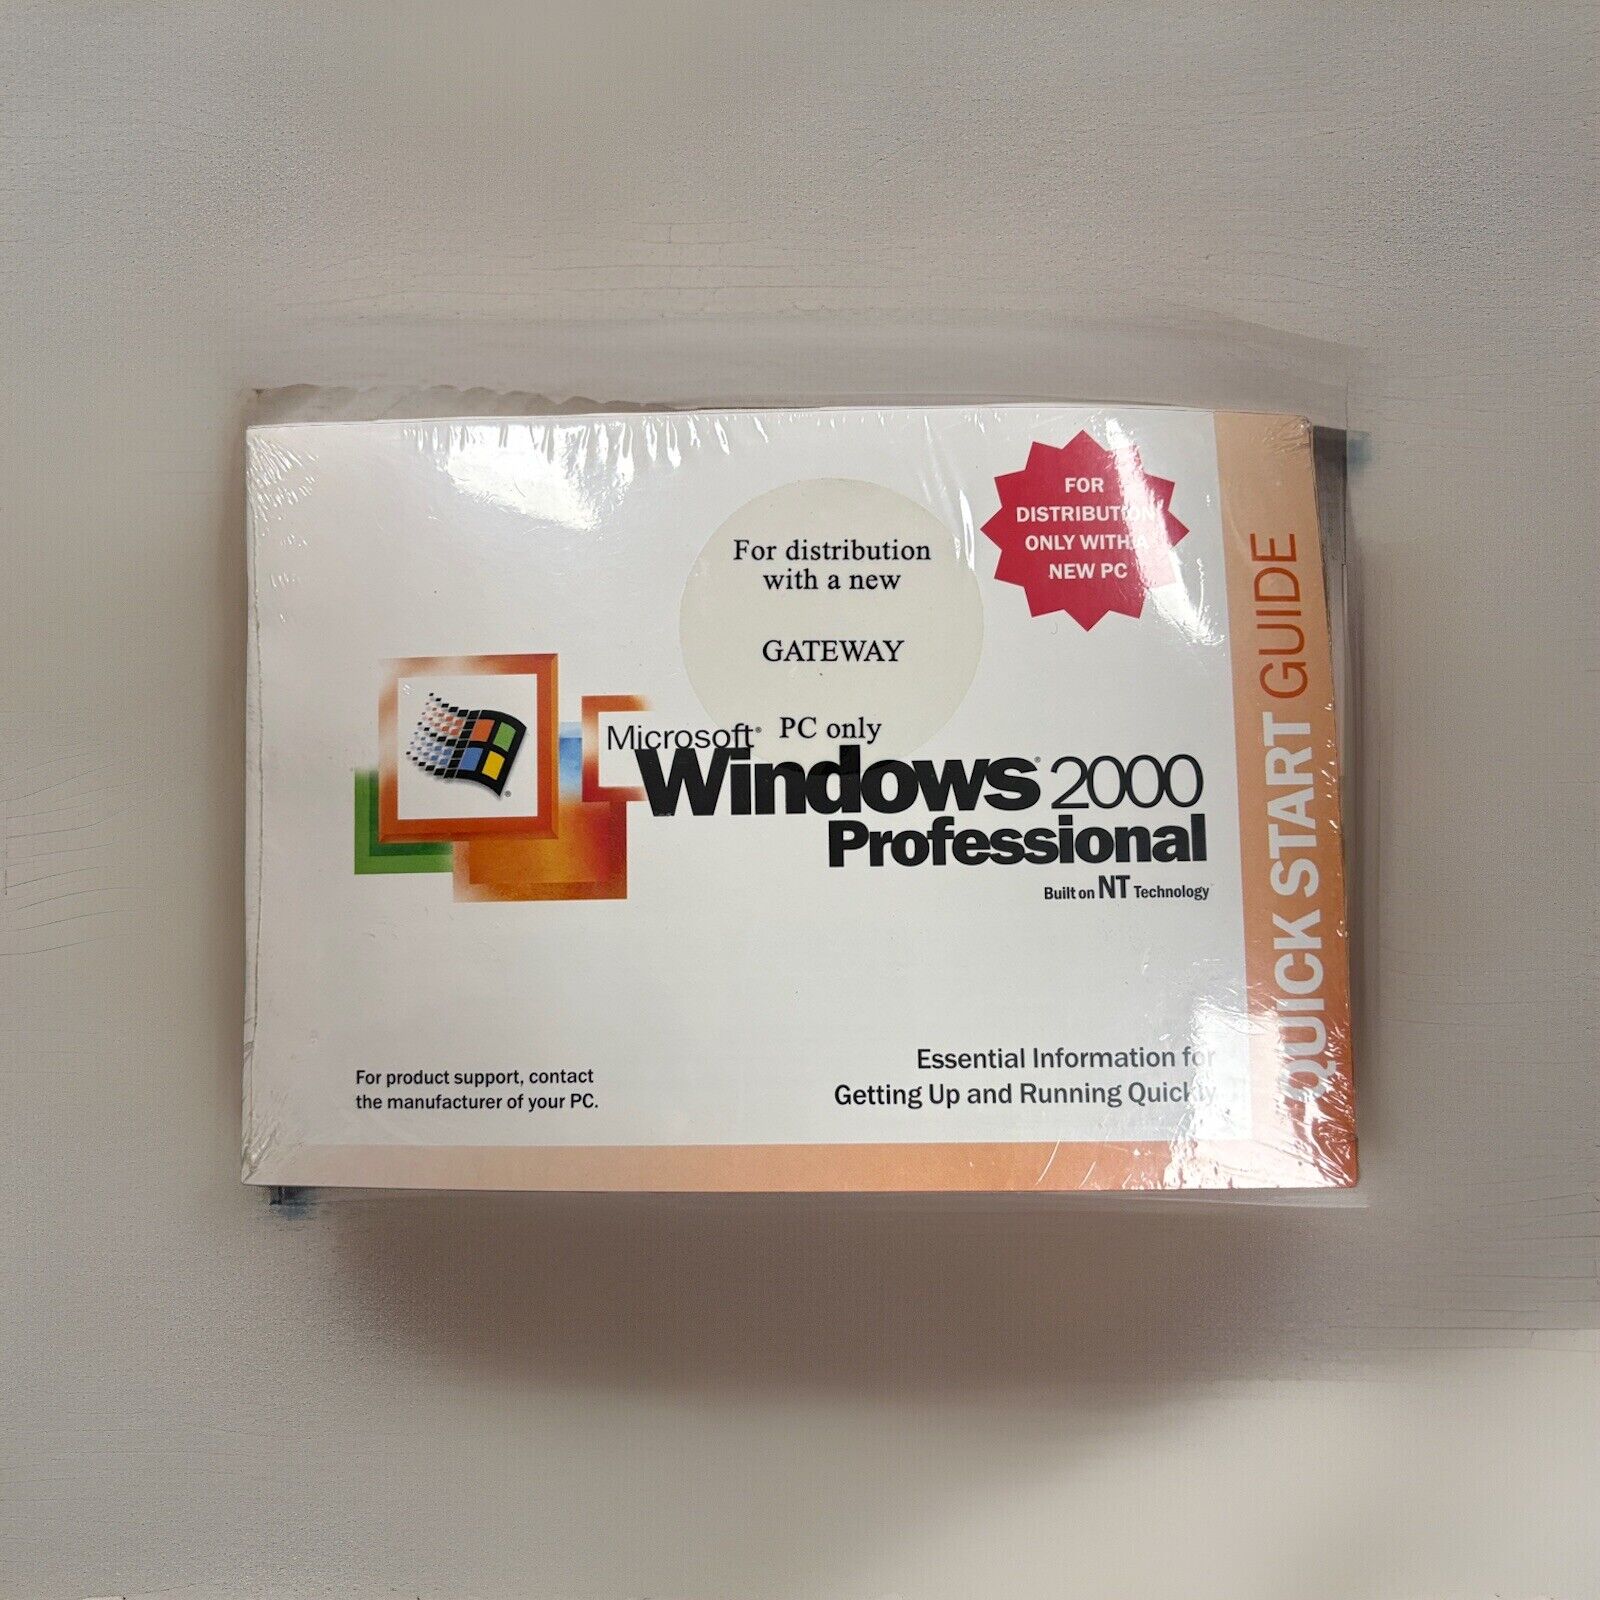 Microsoft Windows 2000 Professional OS (NEW in original shrink wrap) For Gateway